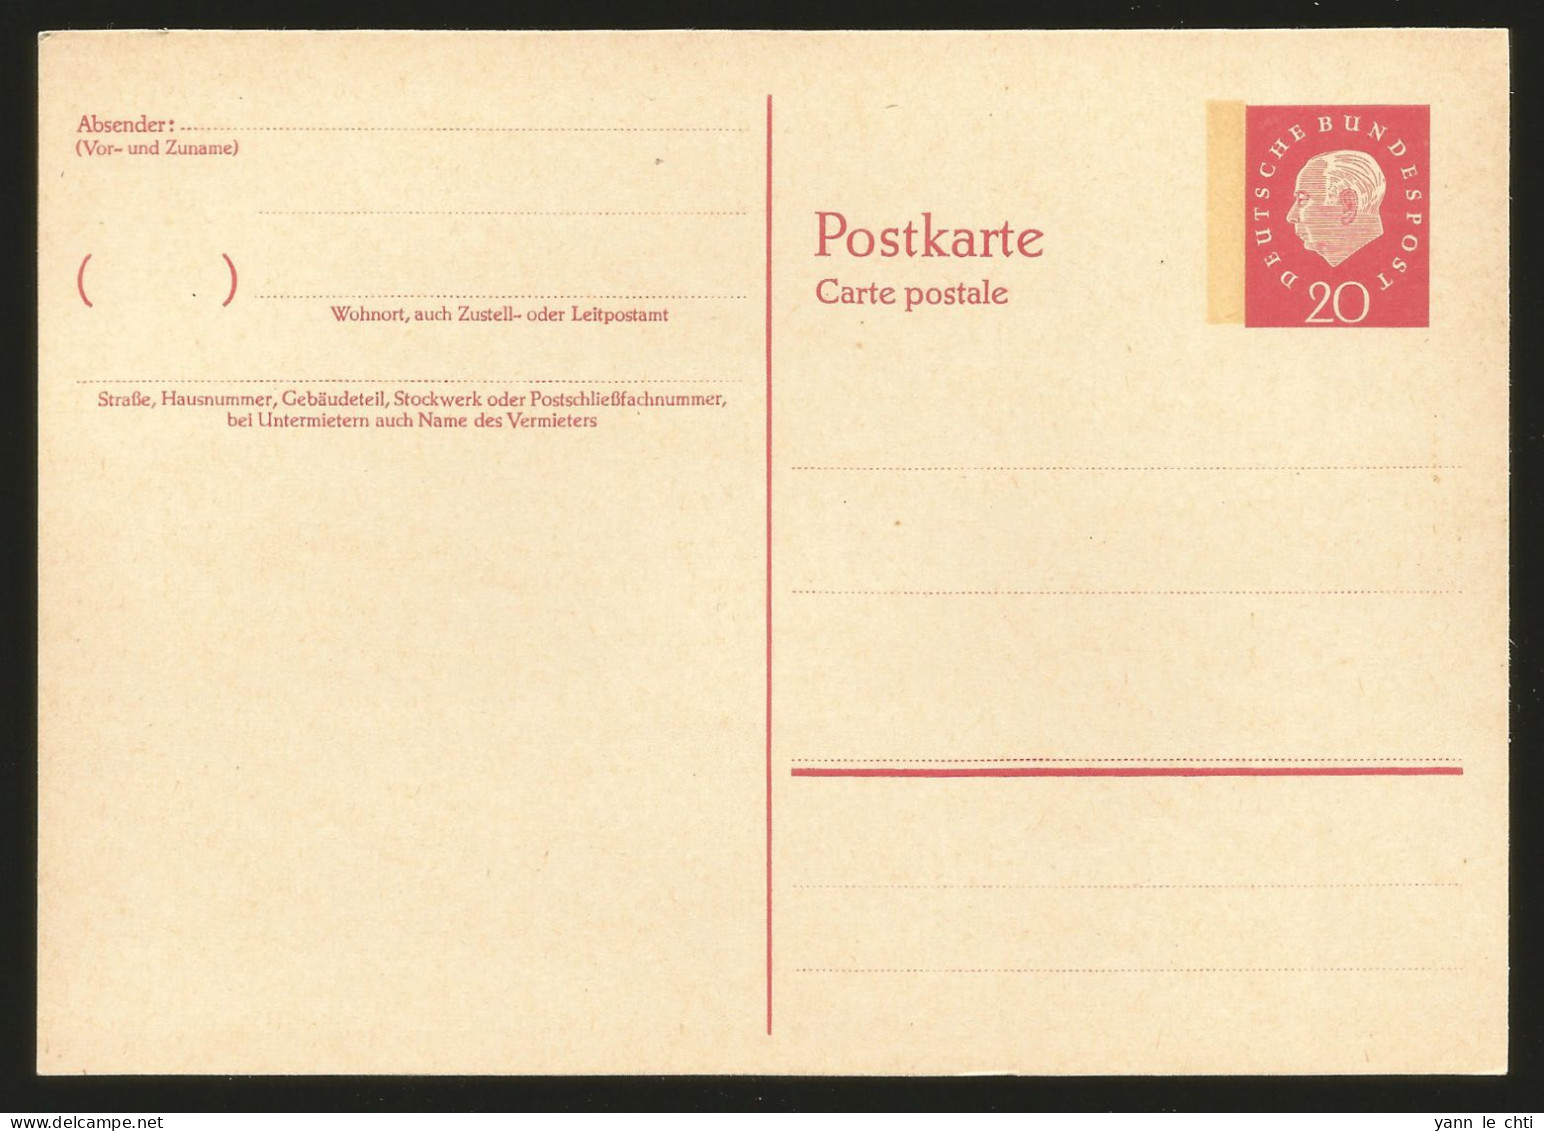 Postkarte Carte Postale Ganzsache 20 Pfennig Theodor Heuss Postfrisch ** - Cartoline Private - Nuovi